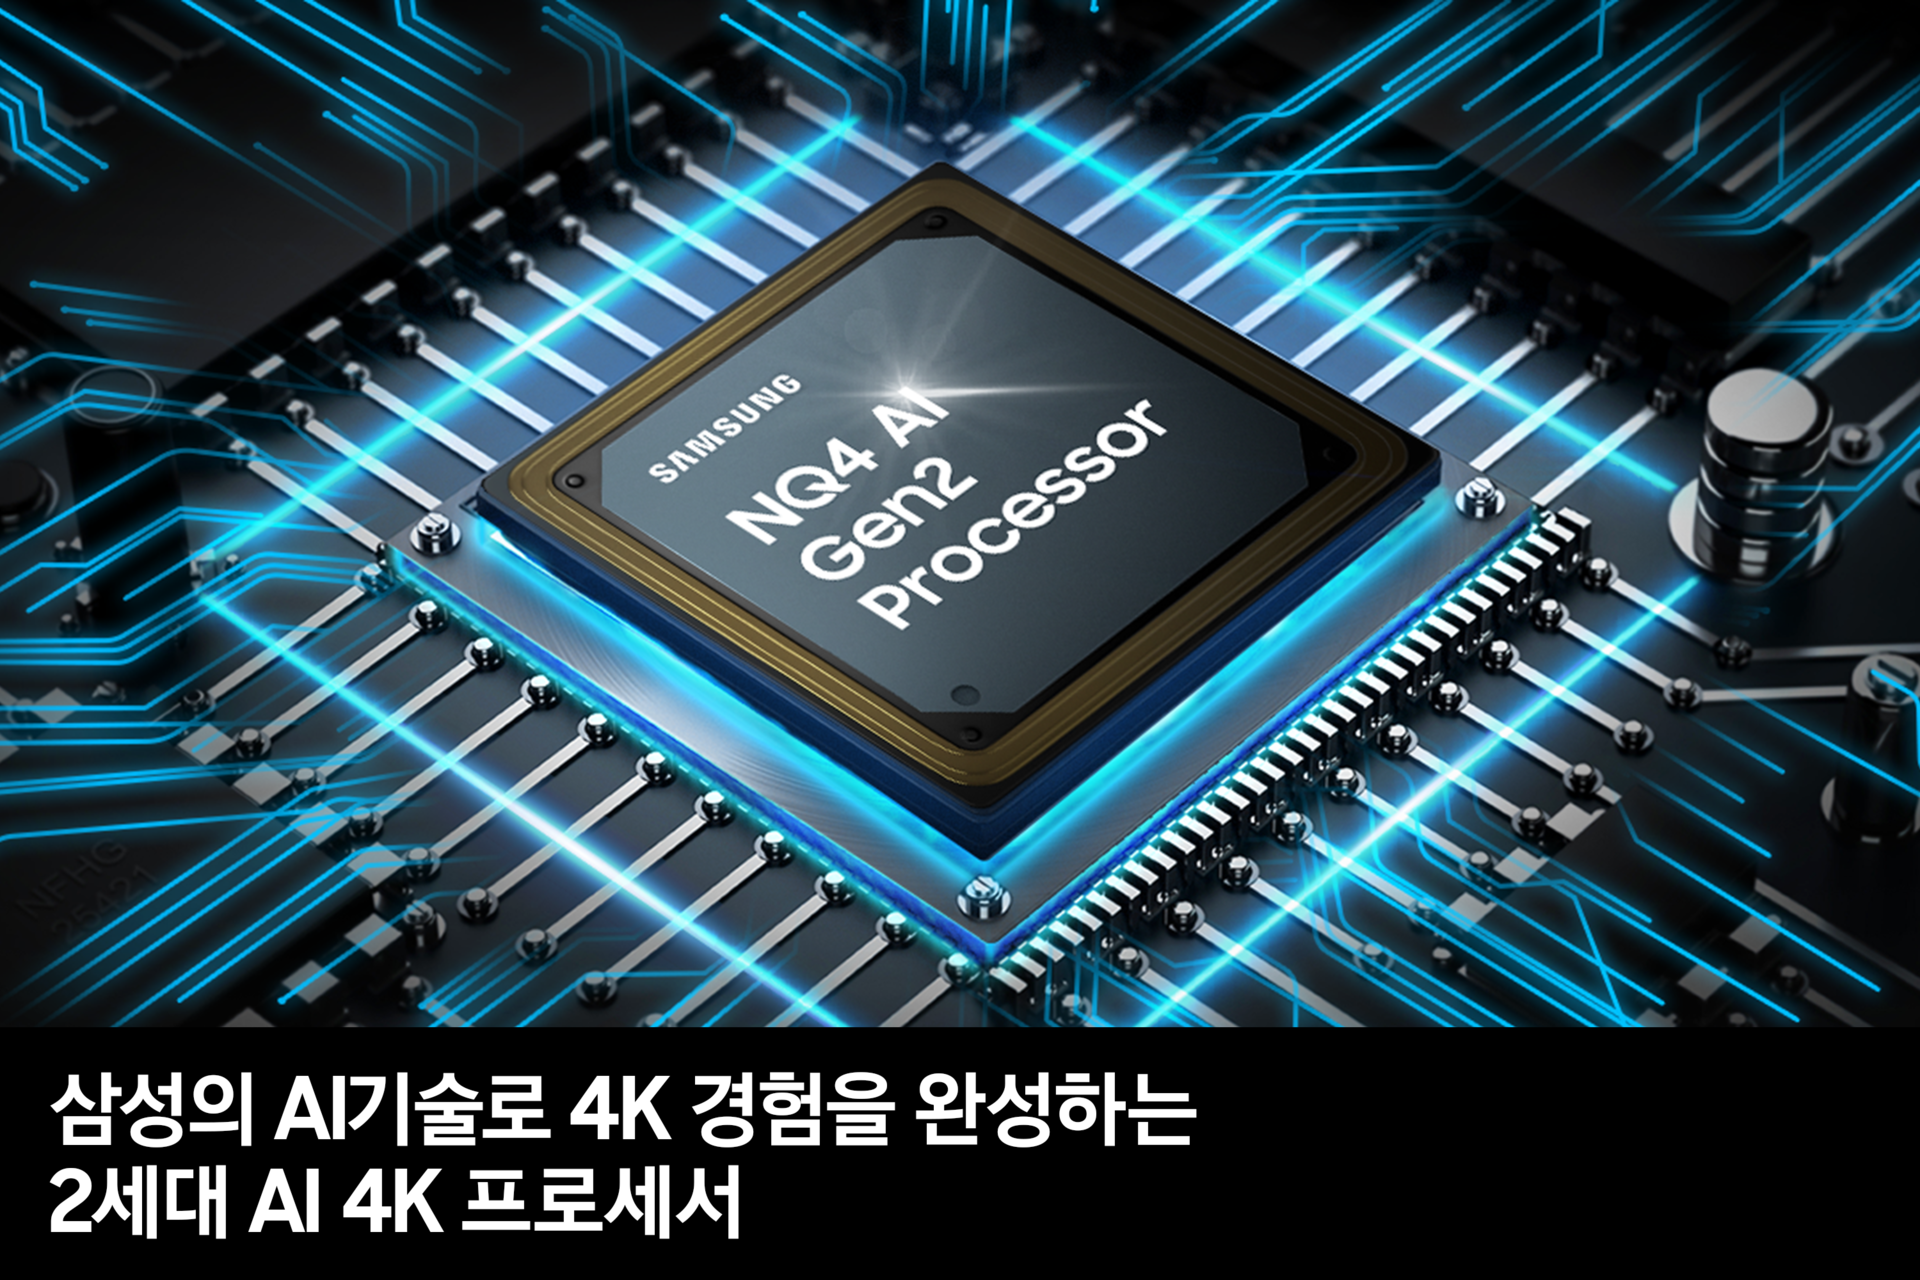 2024 OLED SD90 (122 cm) 의2세대 AI 4K 프로세서 칩이 보입니다. 삼성의 AI기술로 4K 경험을 완성하는 2세대 AI 4K 프로세서 feature 컷입니다.  